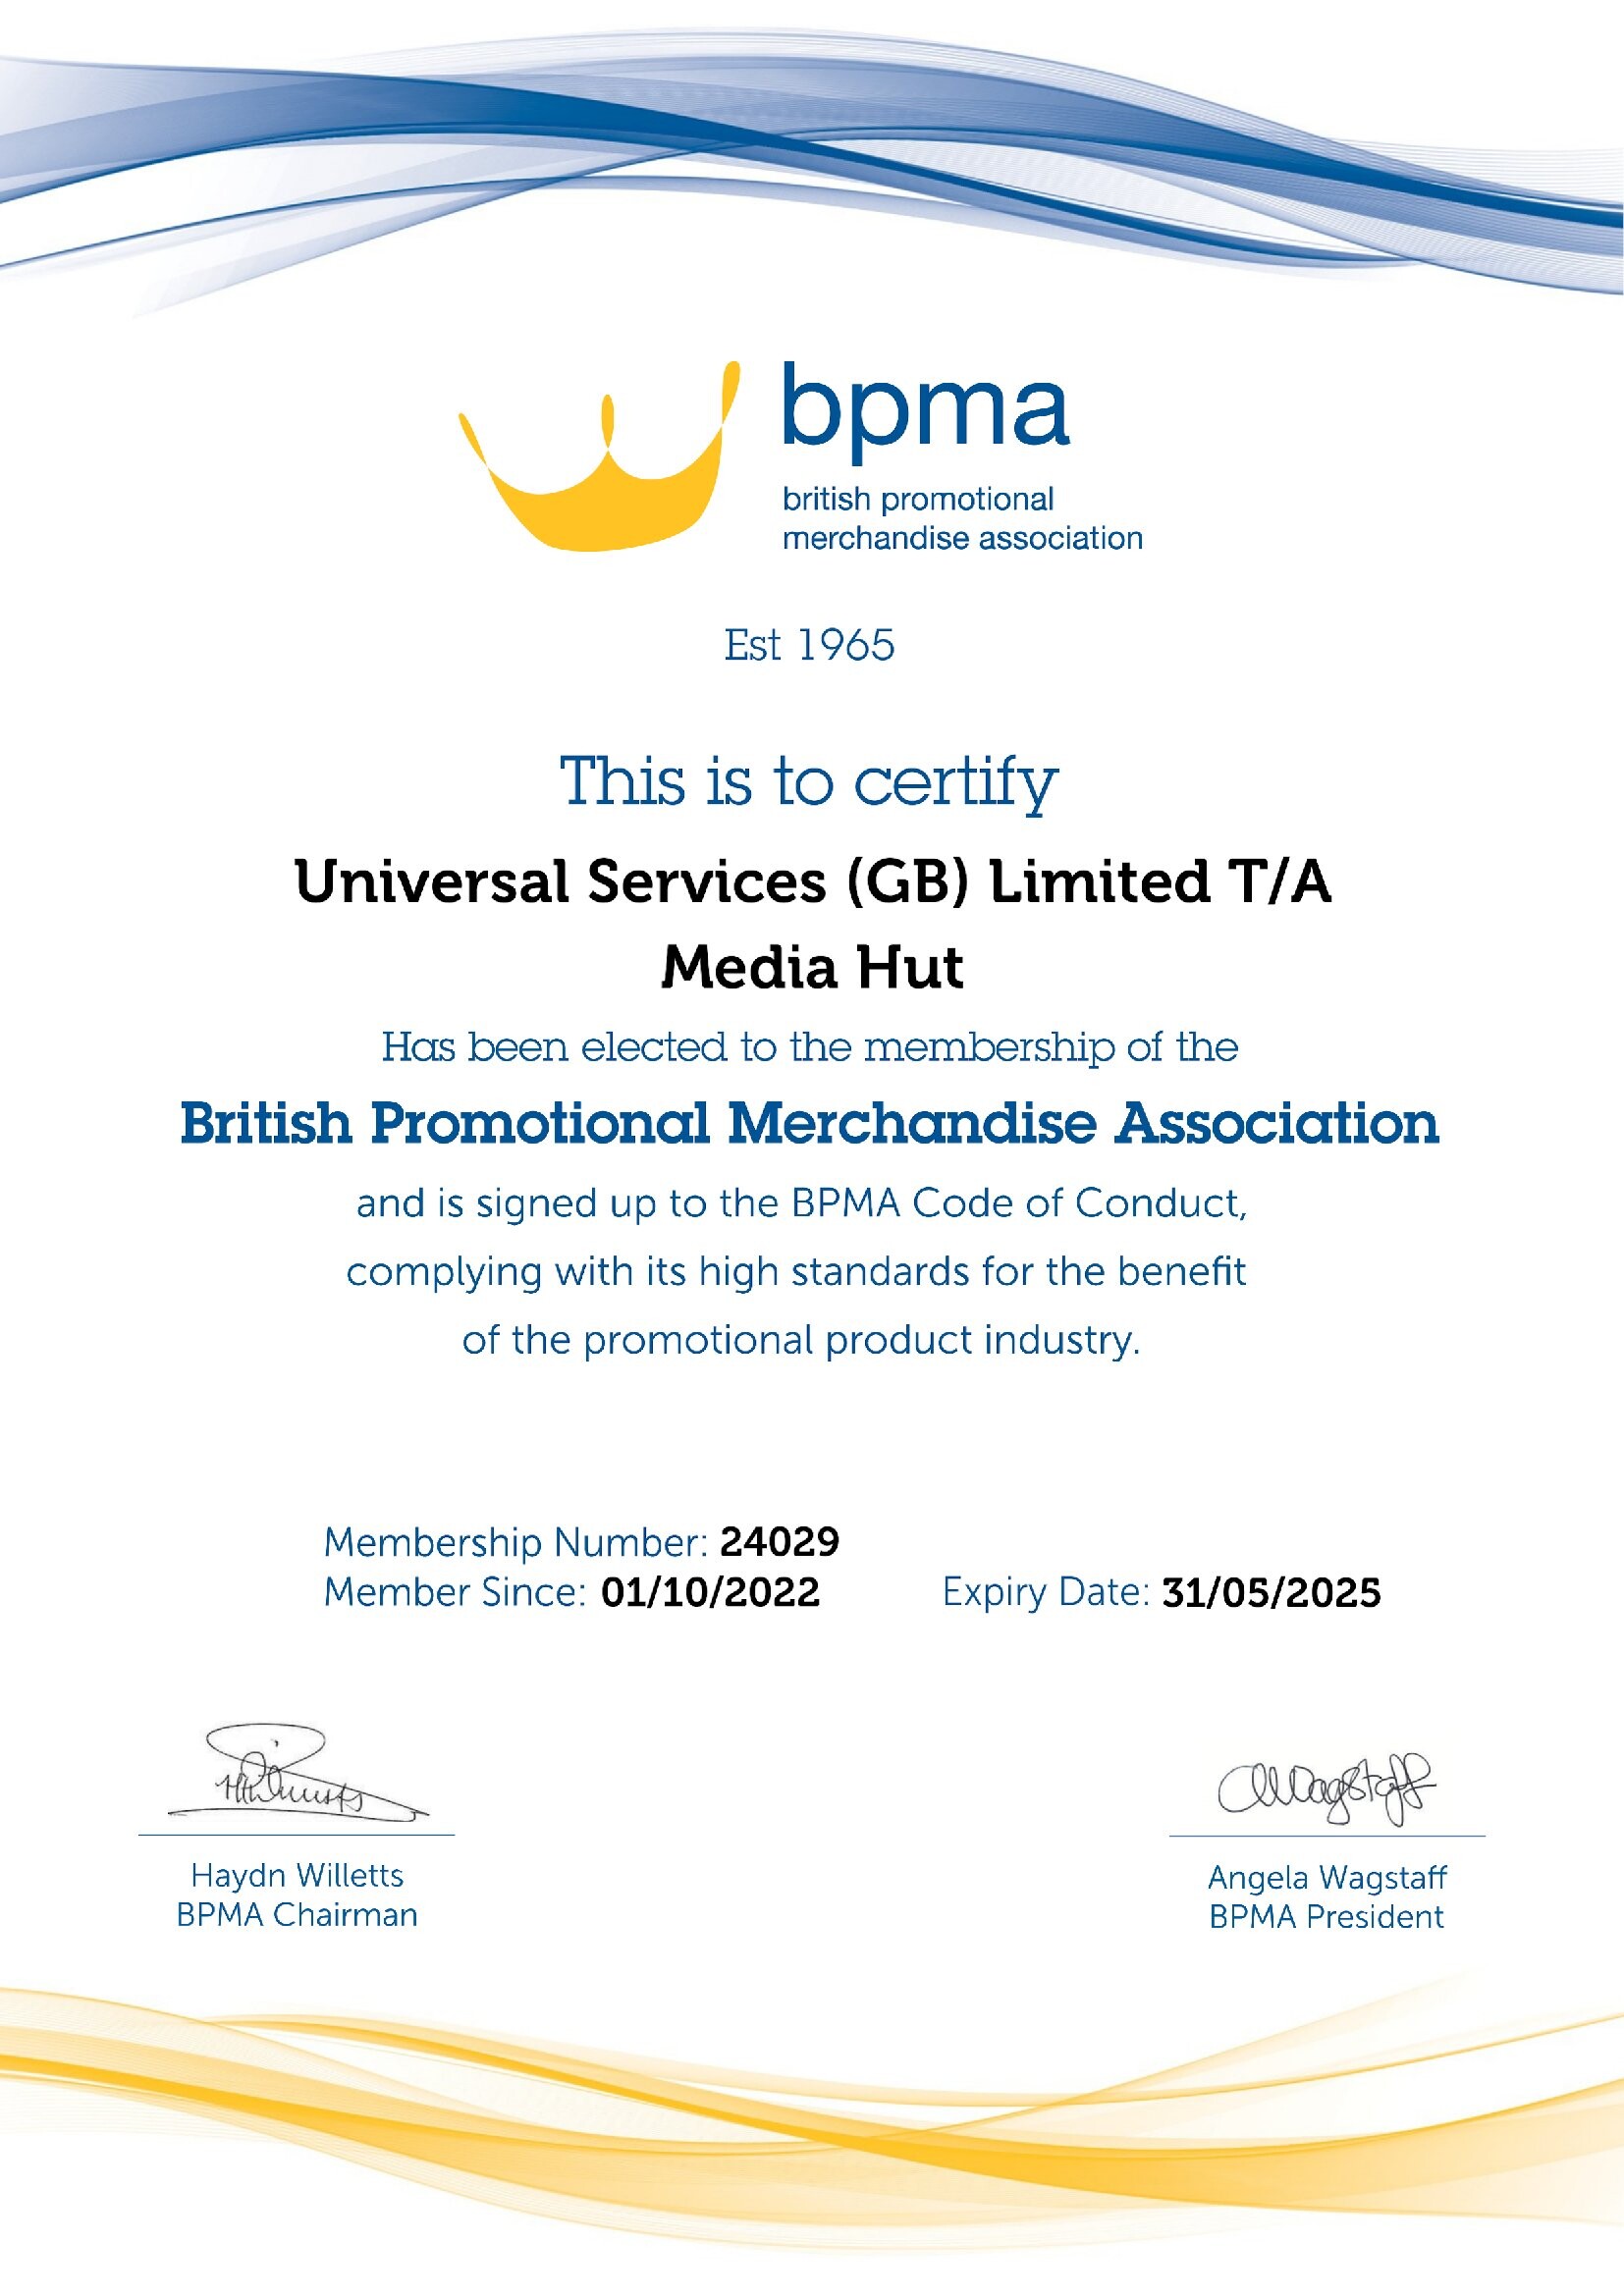 British Promotional Merchandise membership certificate